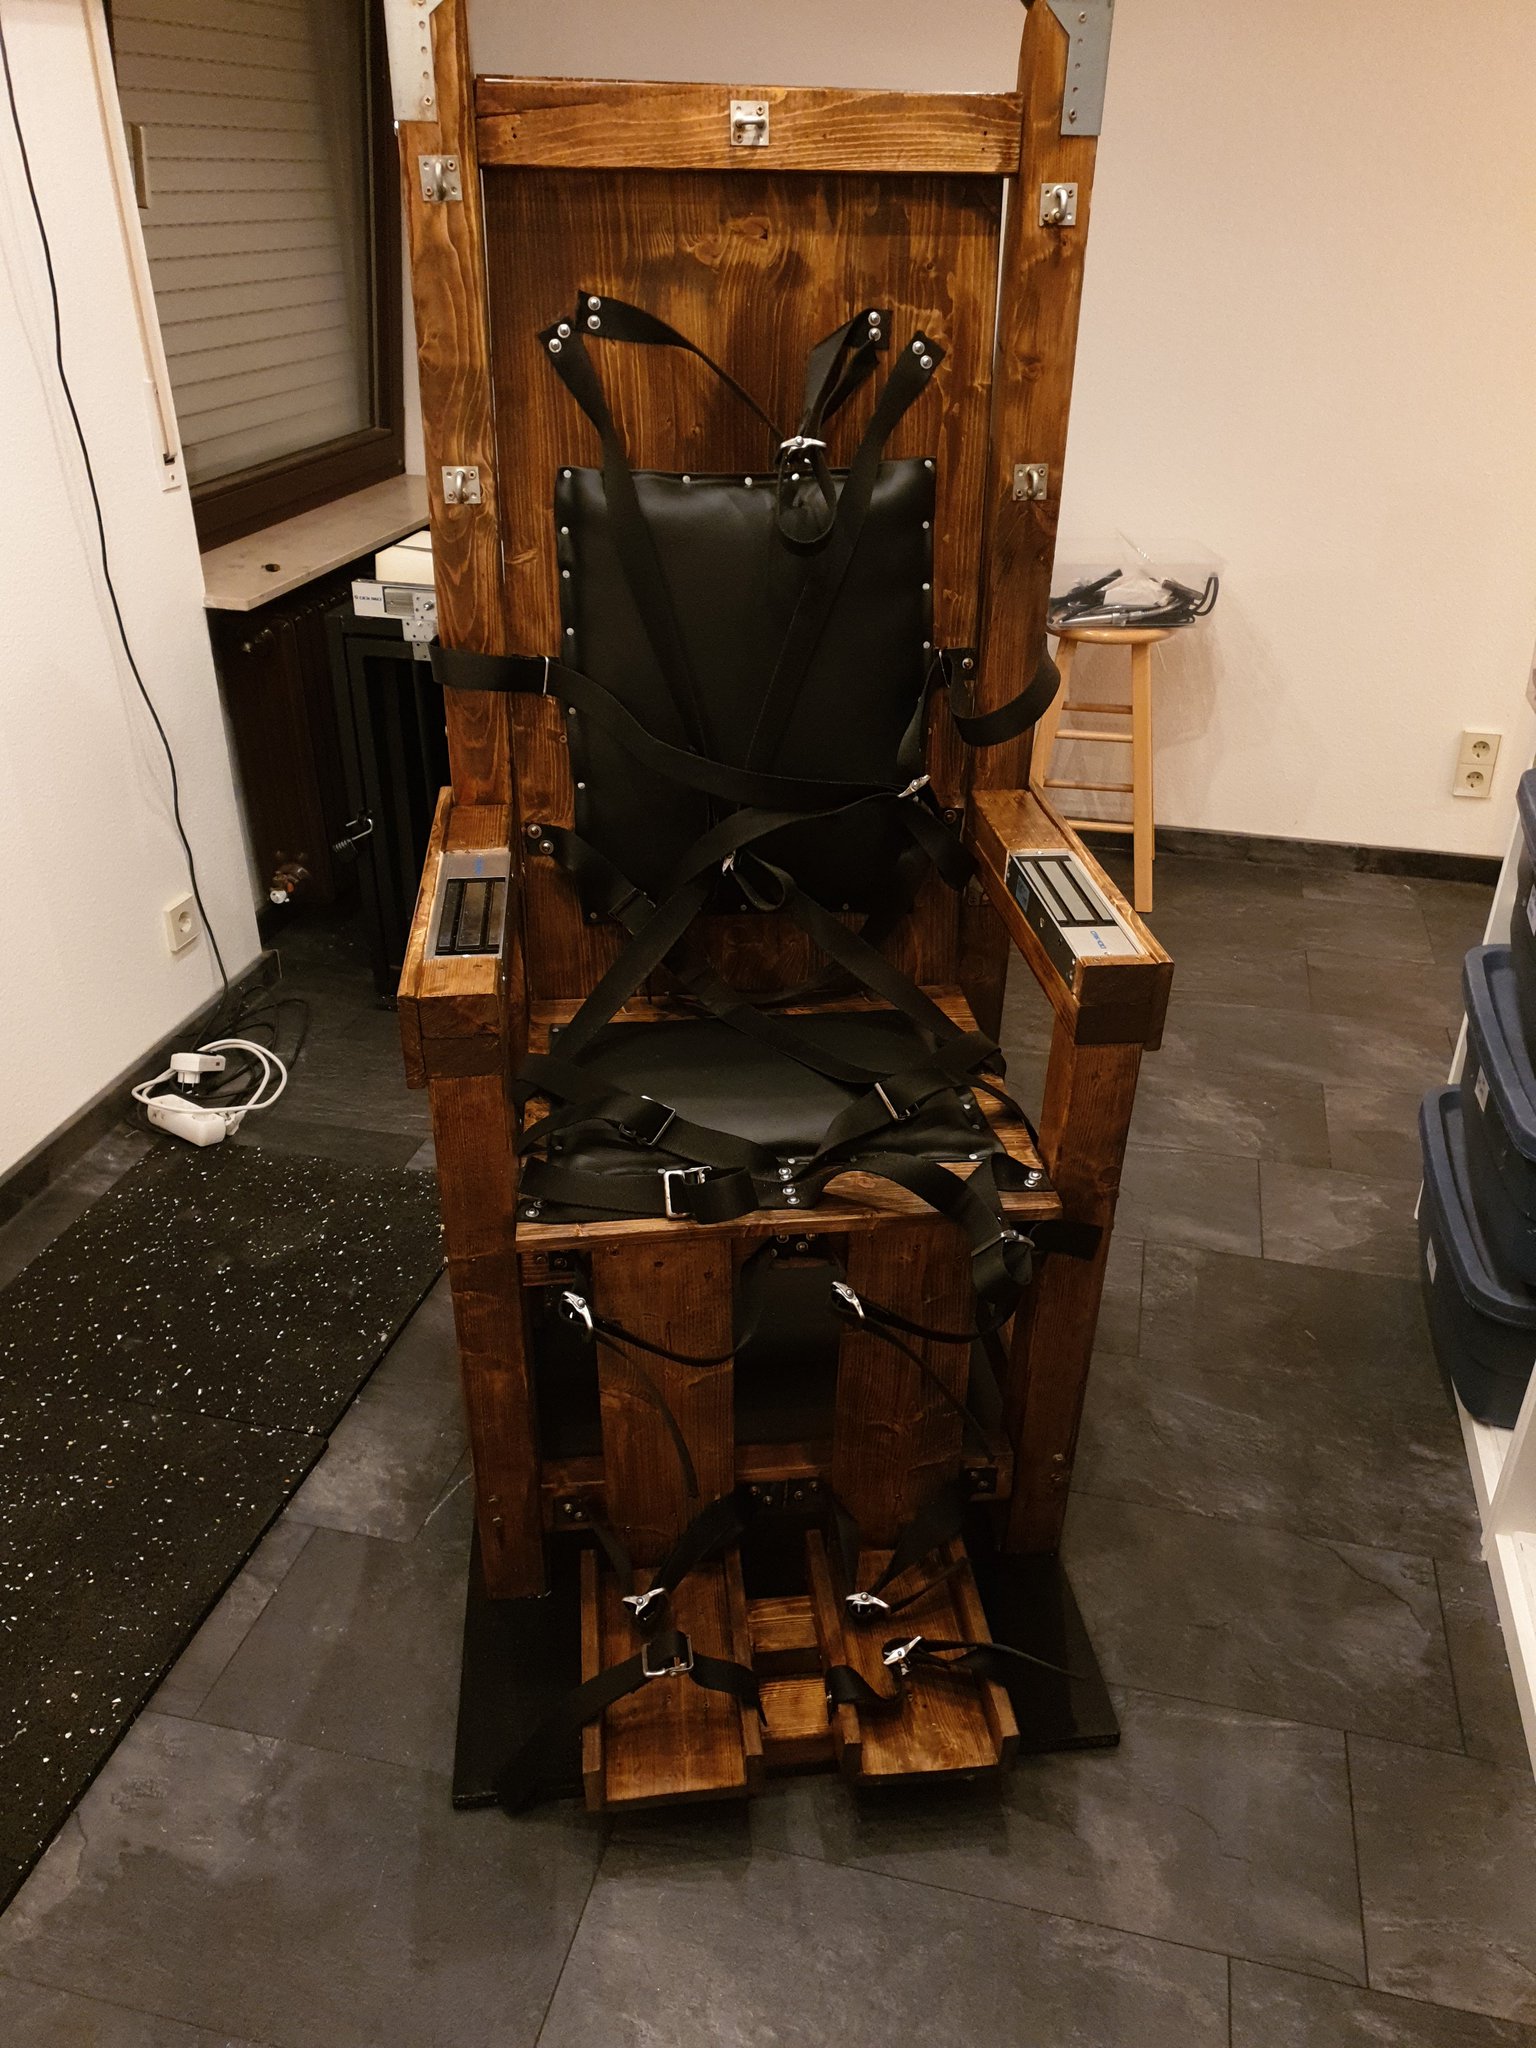 “Self-Bondage chair upgrade finally done